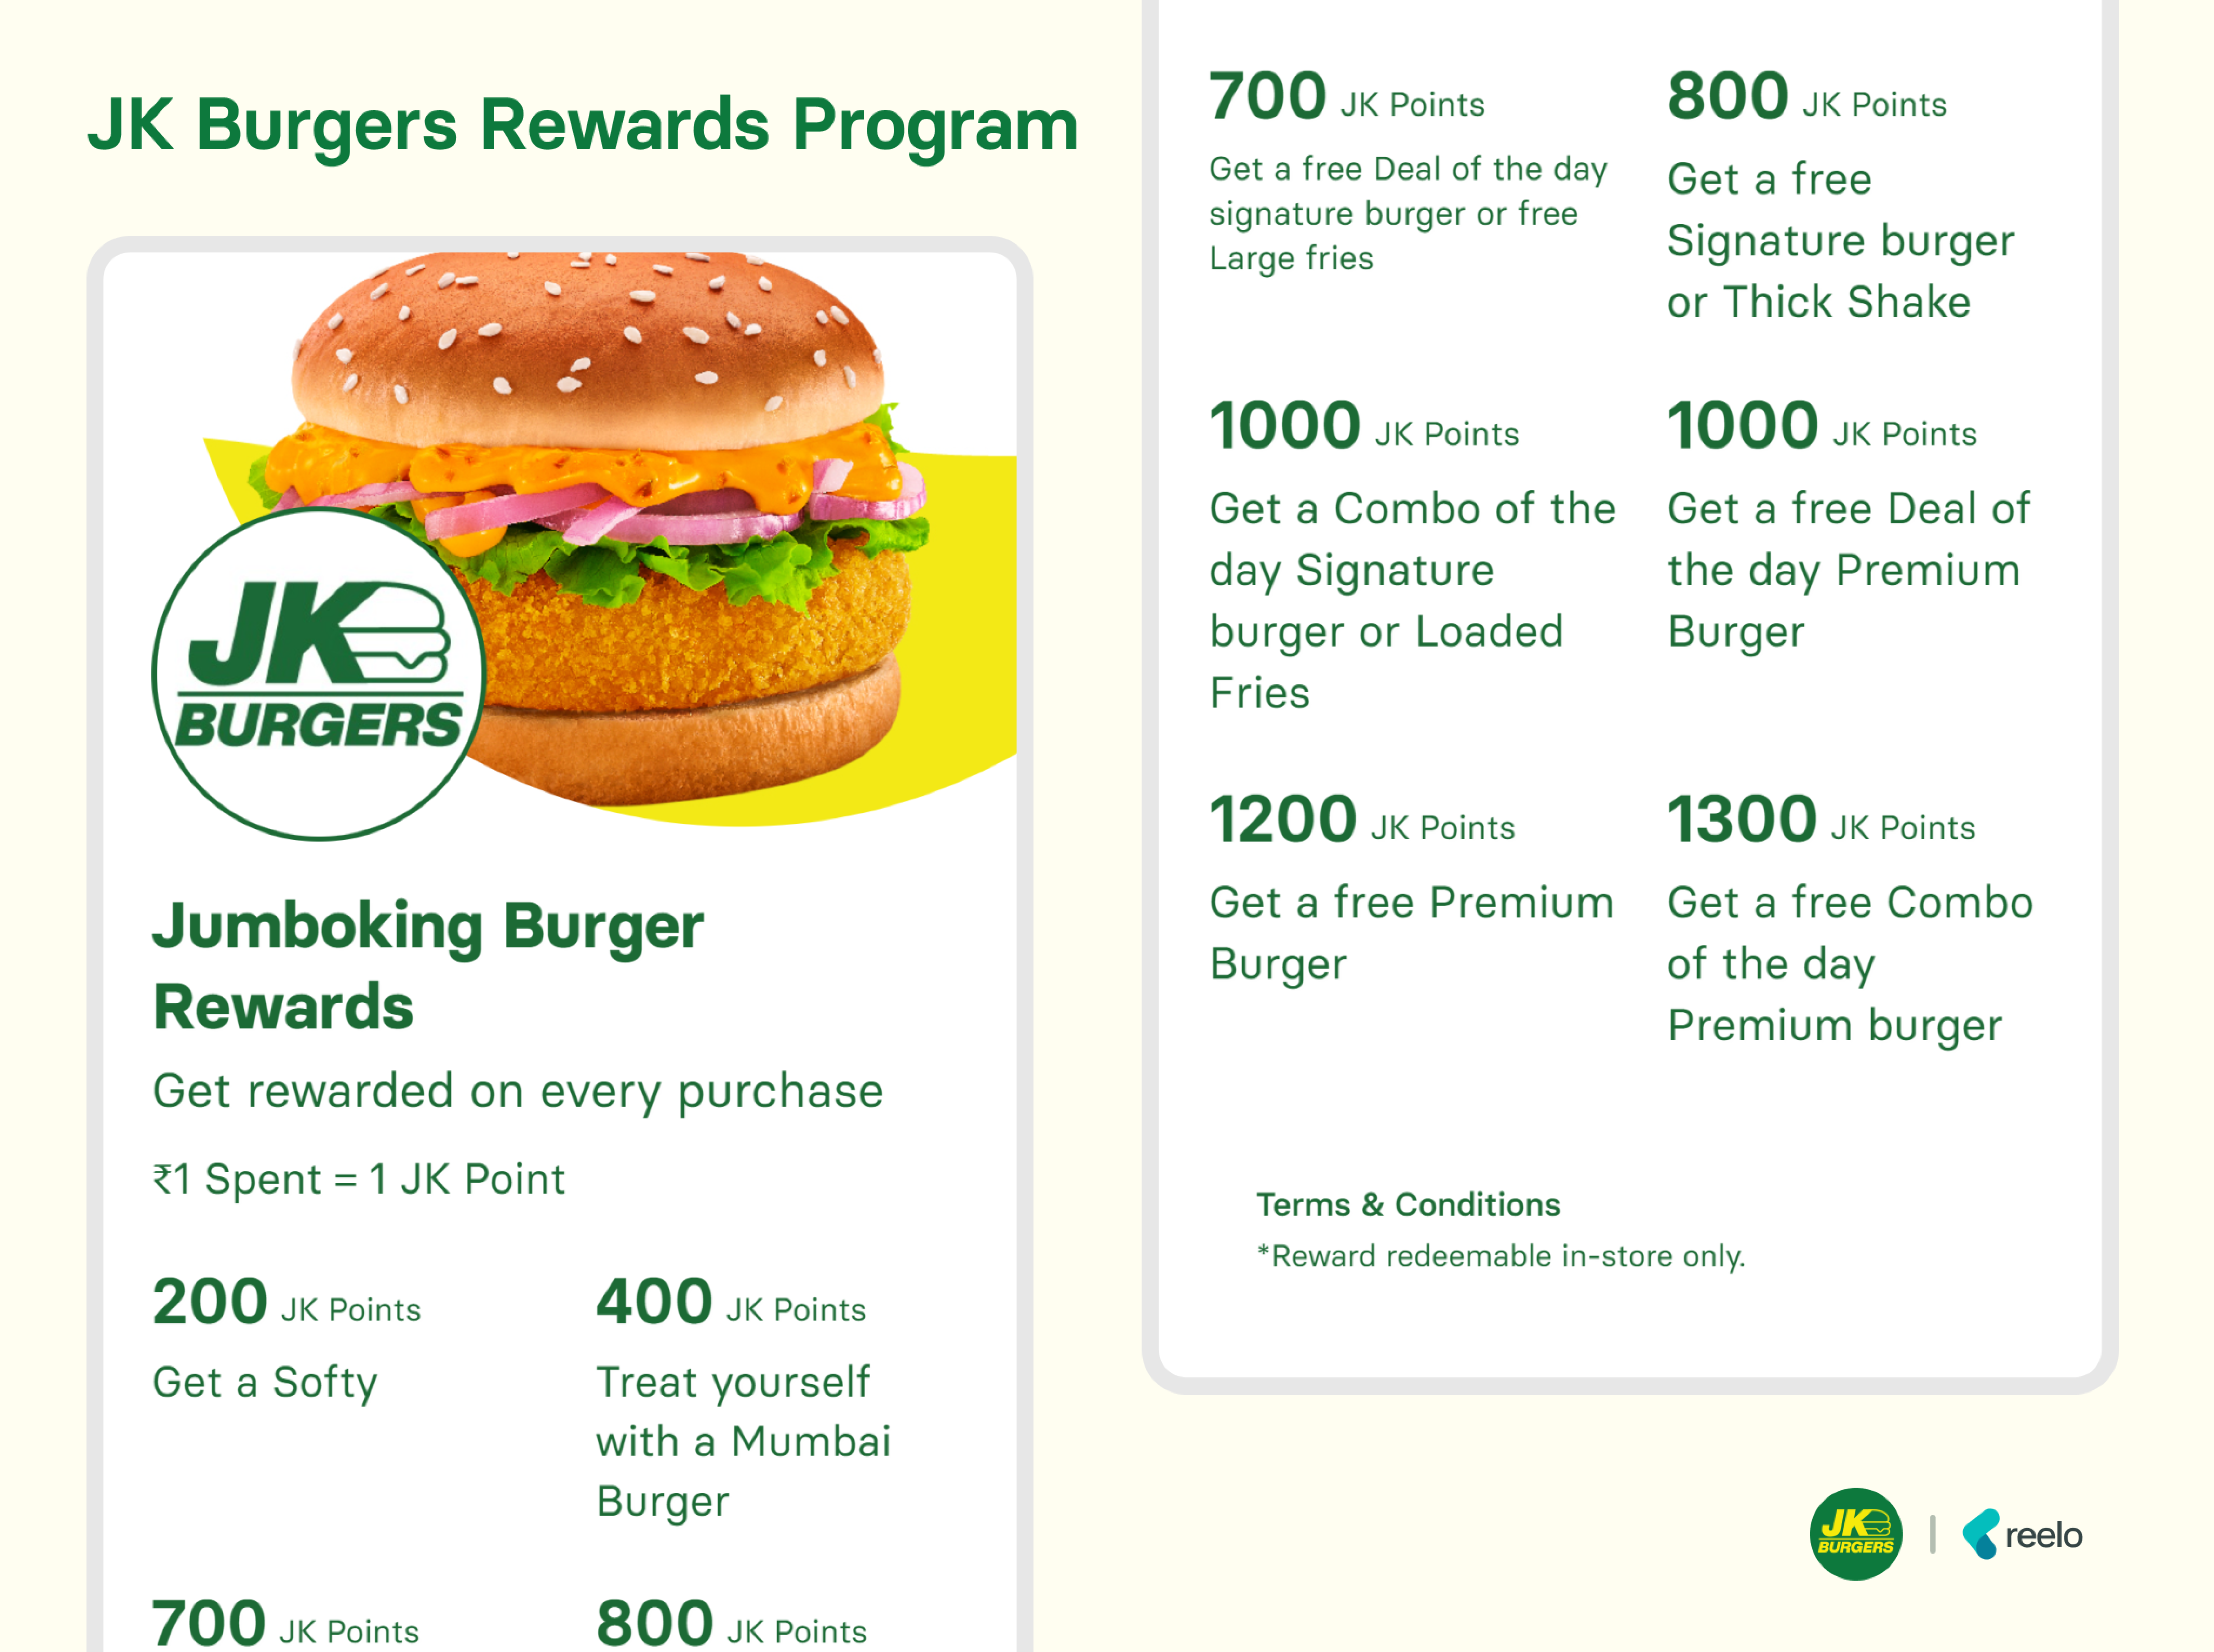 Jumboking Burgers Rewards Program